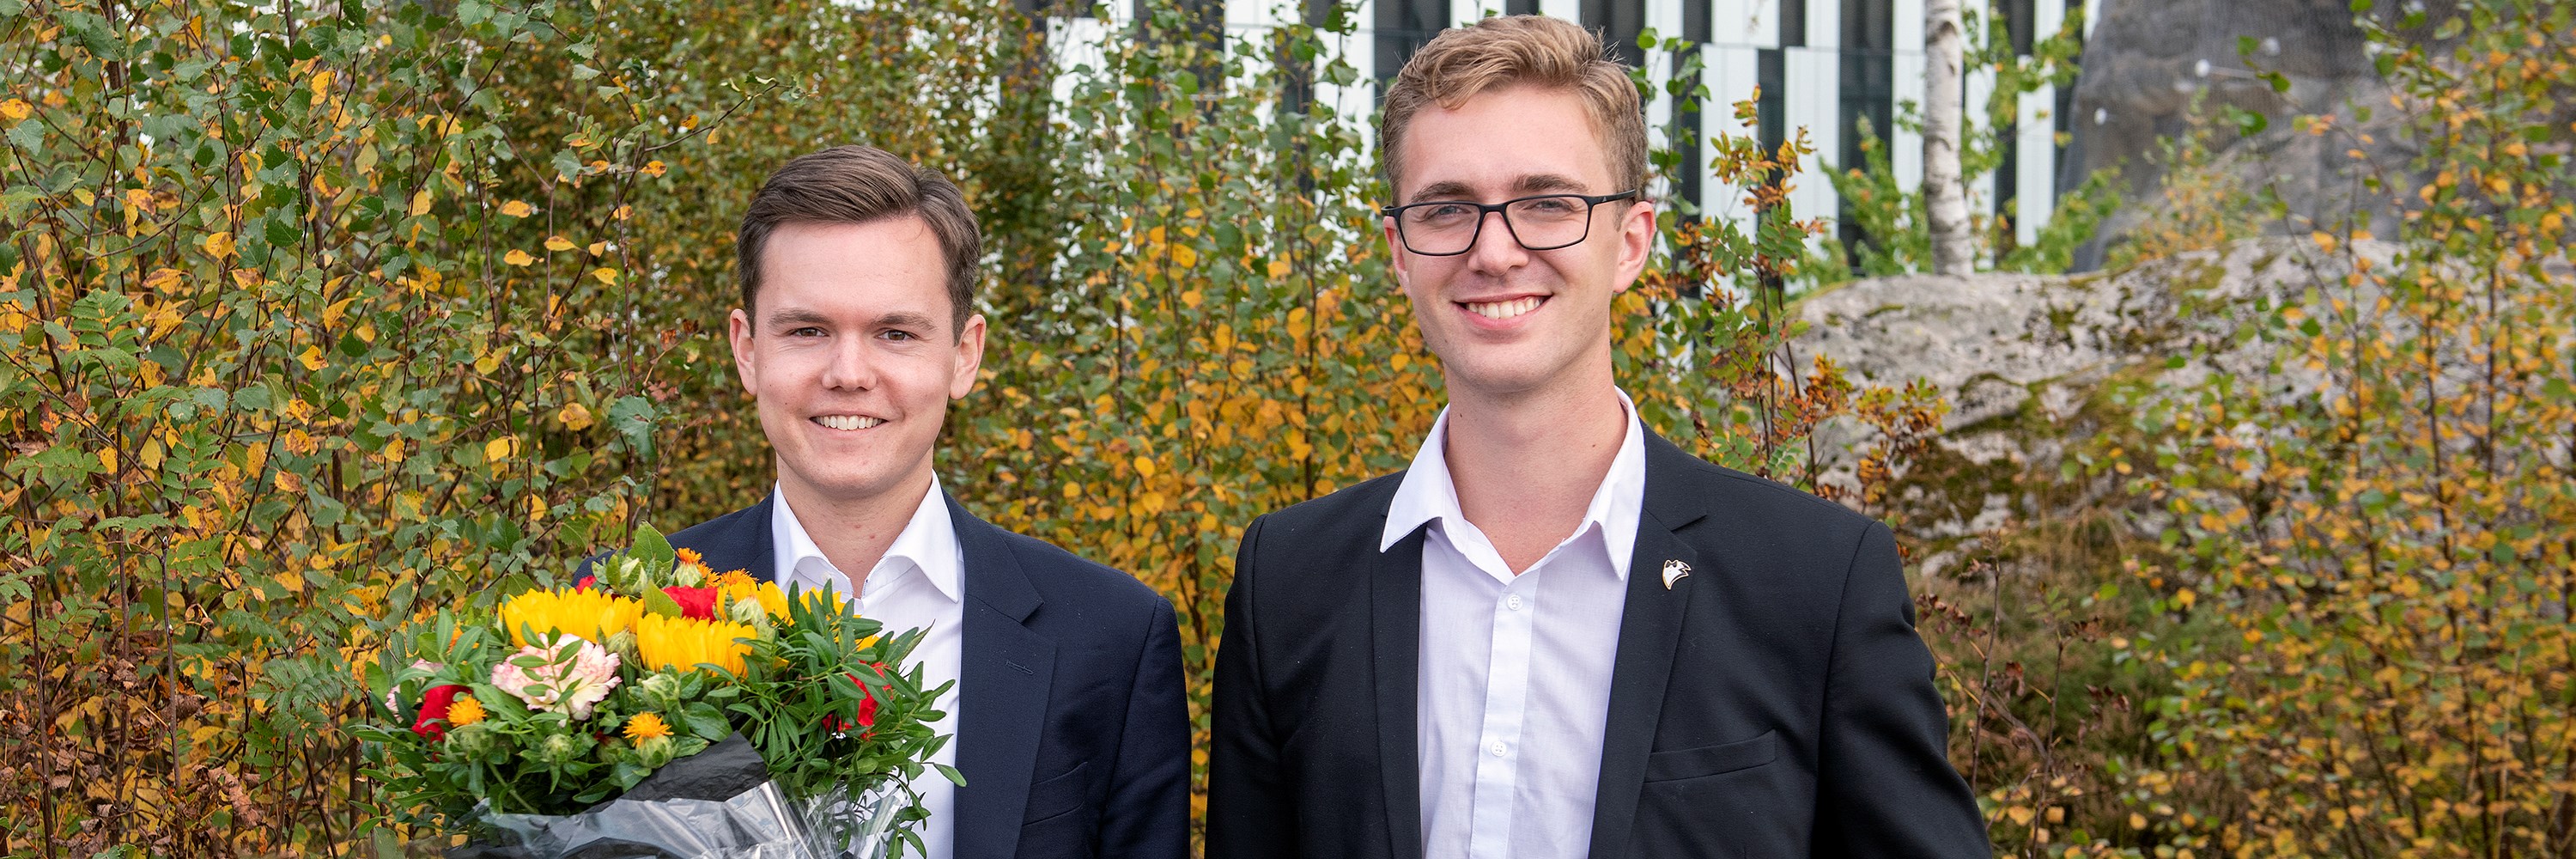 Masterstudentane Aleksander Erstad og Hans Kristian Engmark